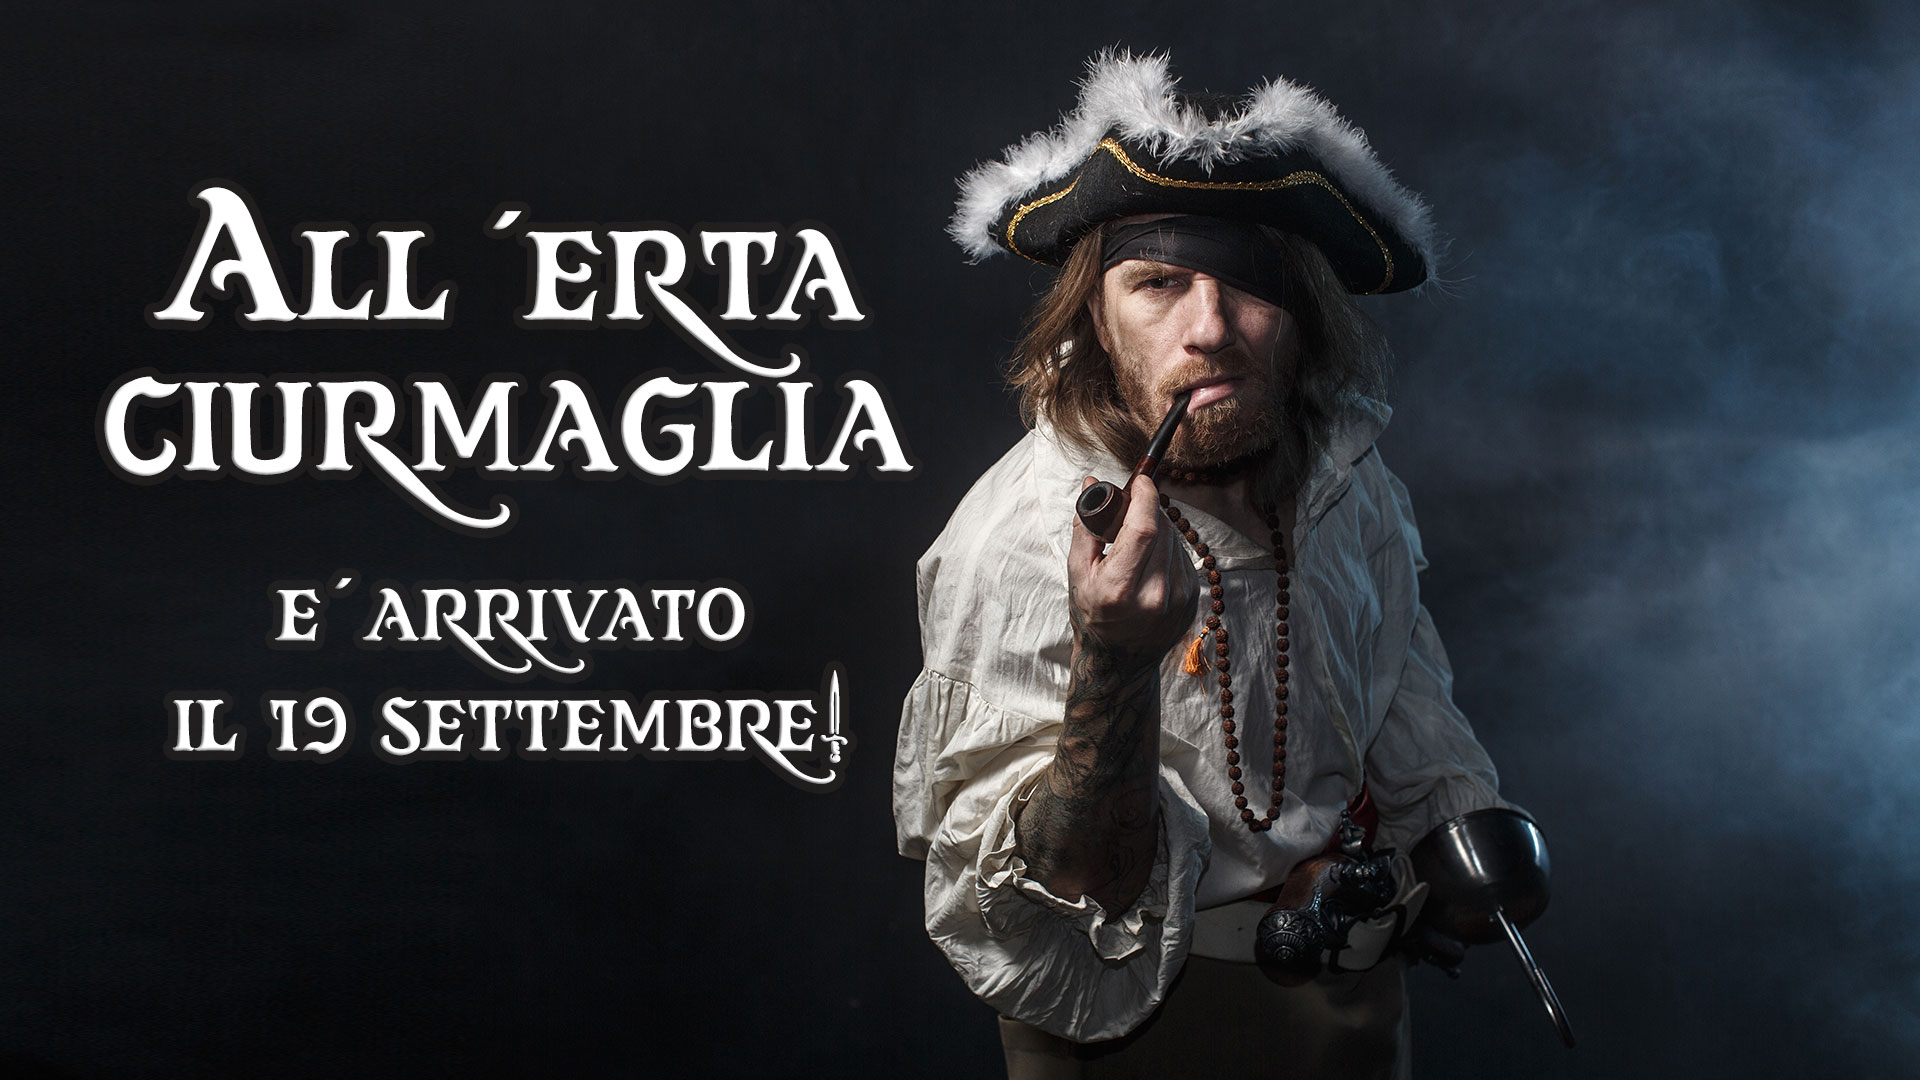 19 settembre - Talk like a pirate day